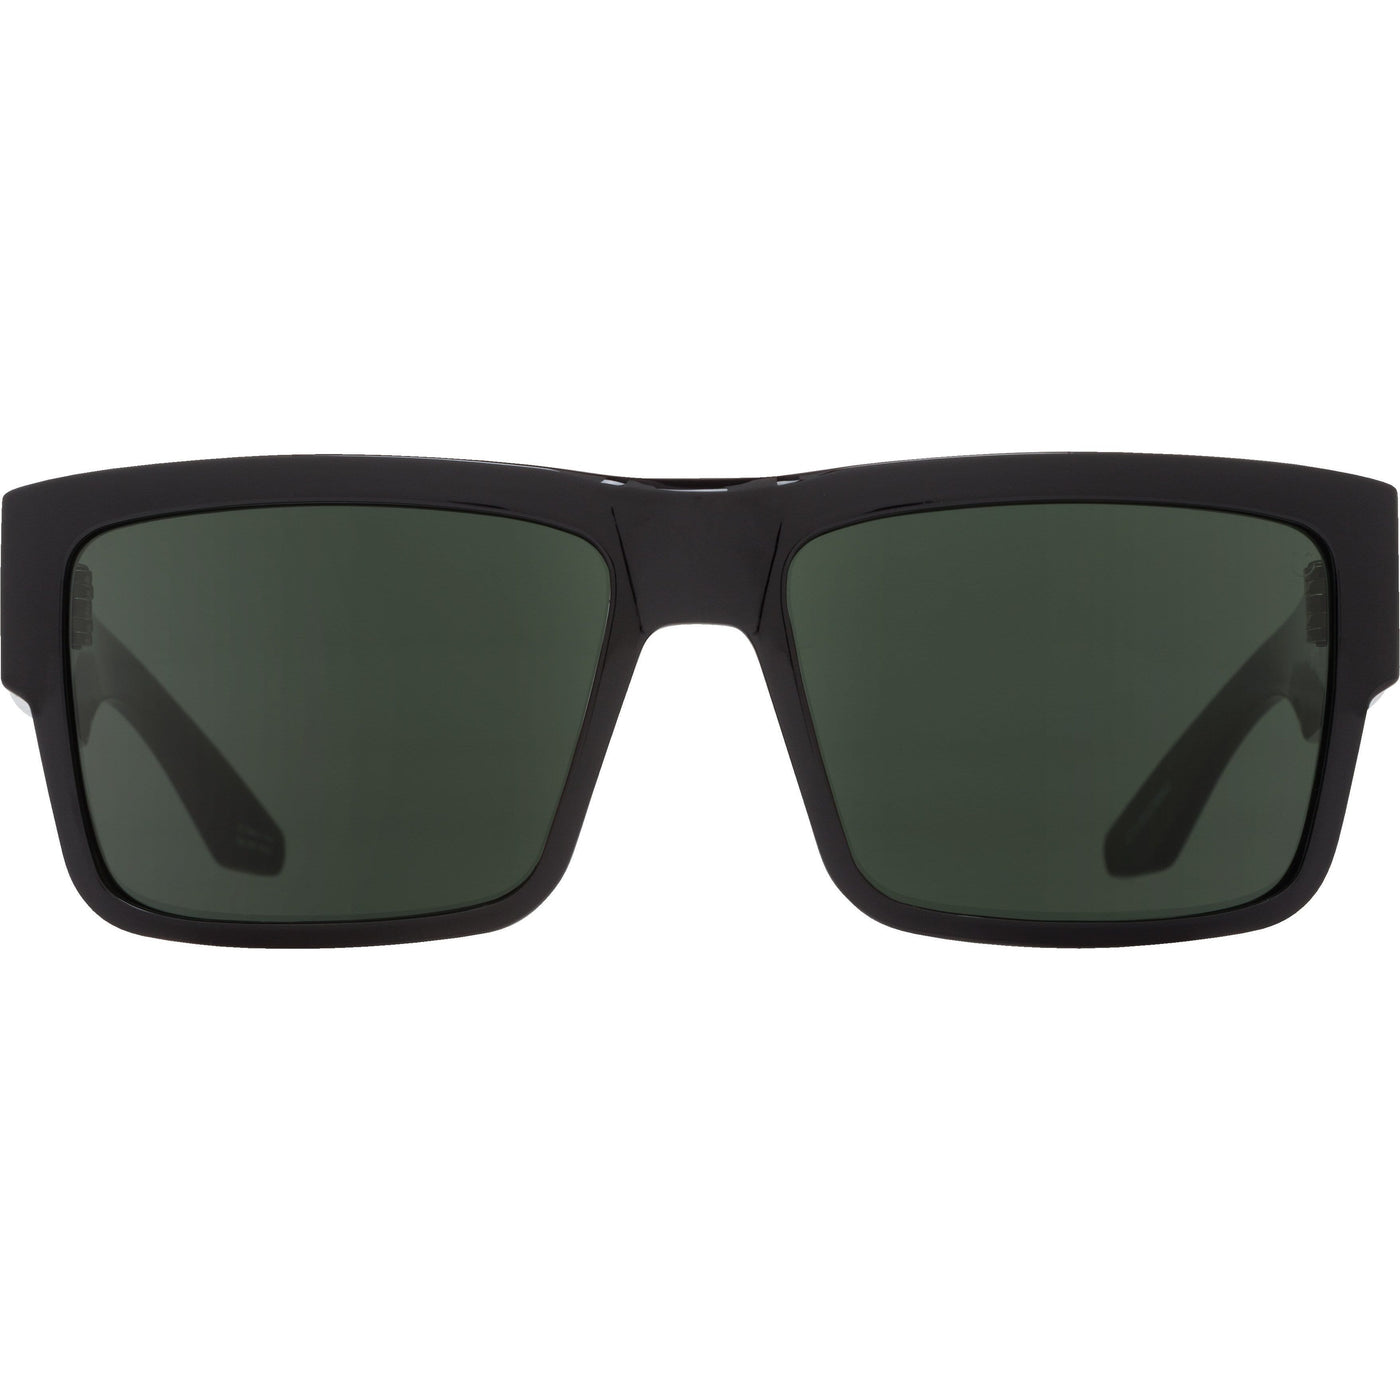 Cyrus square sunglasses - black